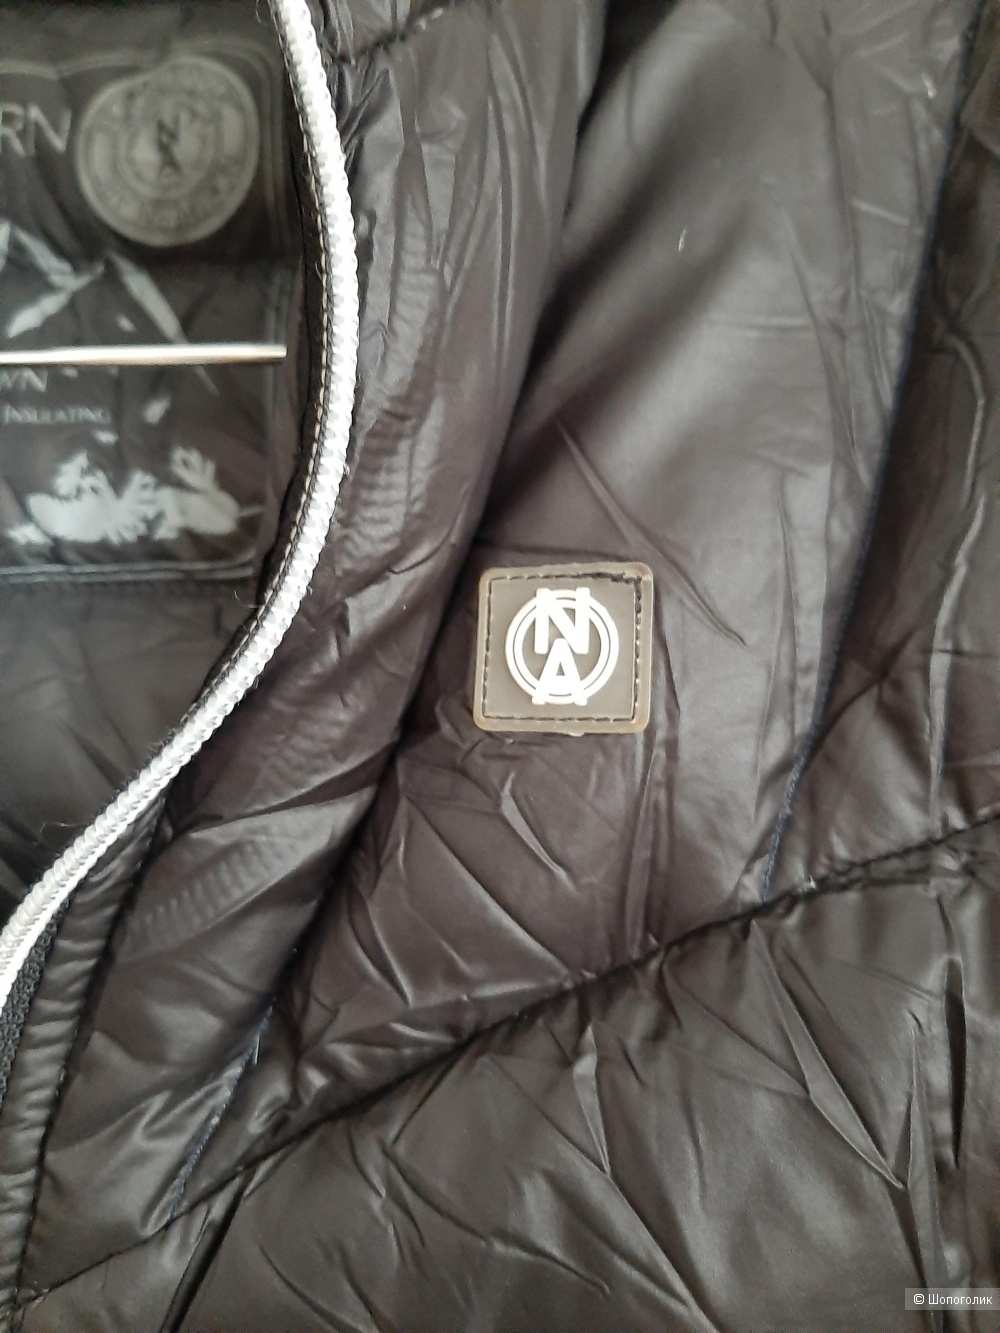 Куртка Northern arc р.м